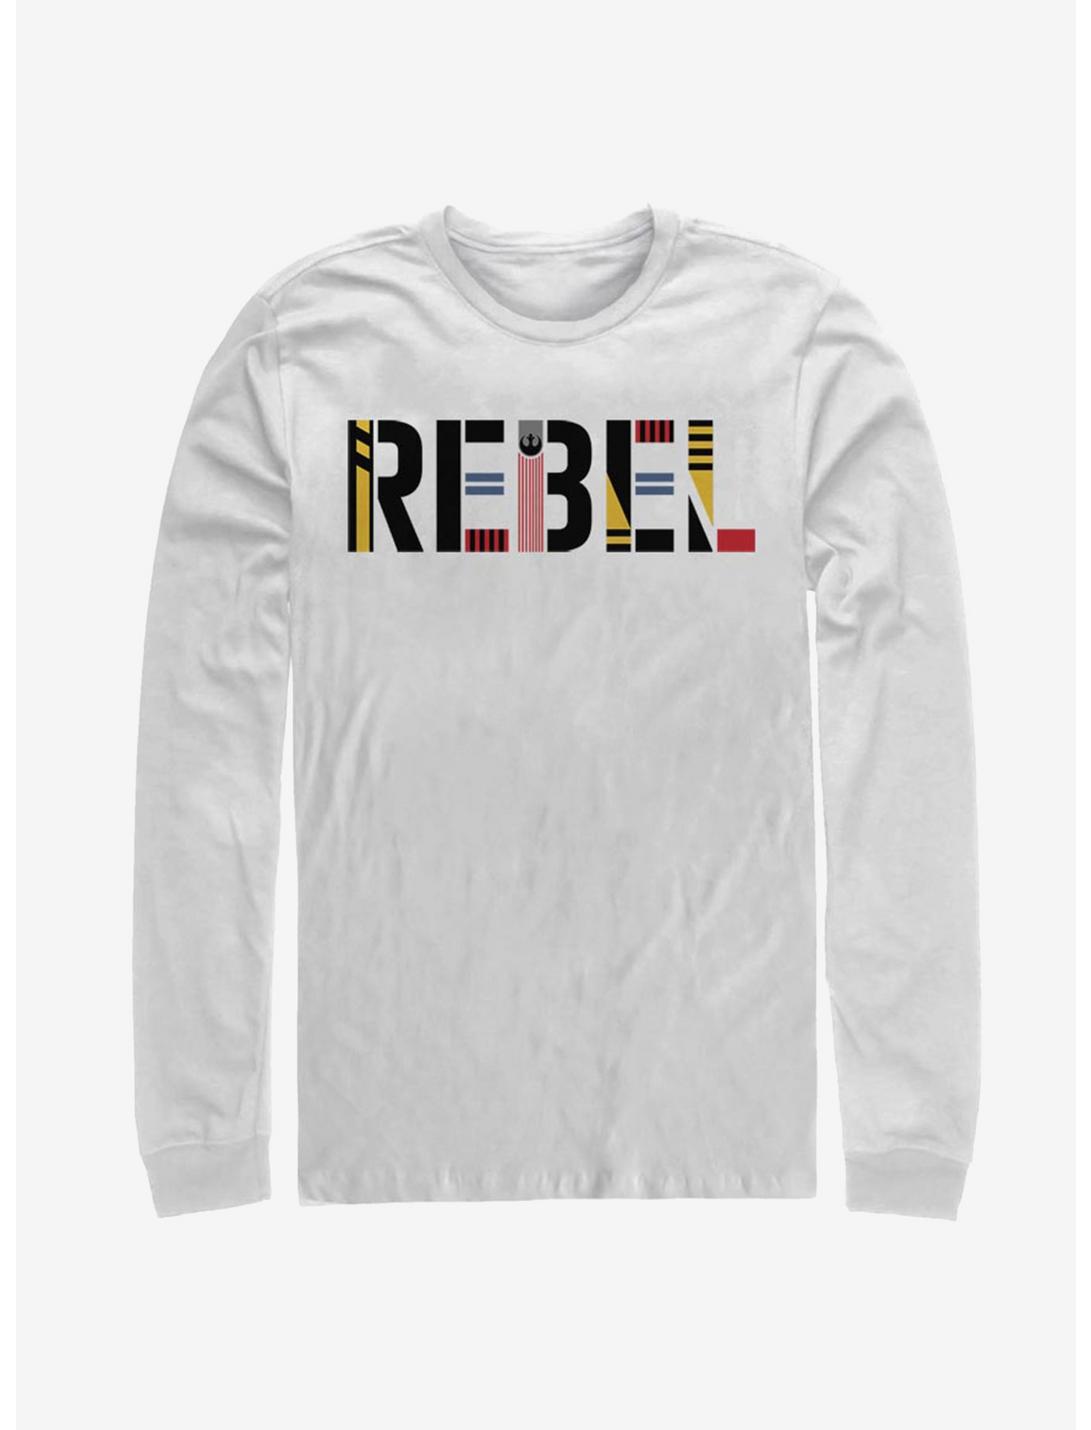 Star Wars Episode IX The Rise Of Skywalker Rebel Simple Long-Sleeve T-Shirt, WHITE, hi-res